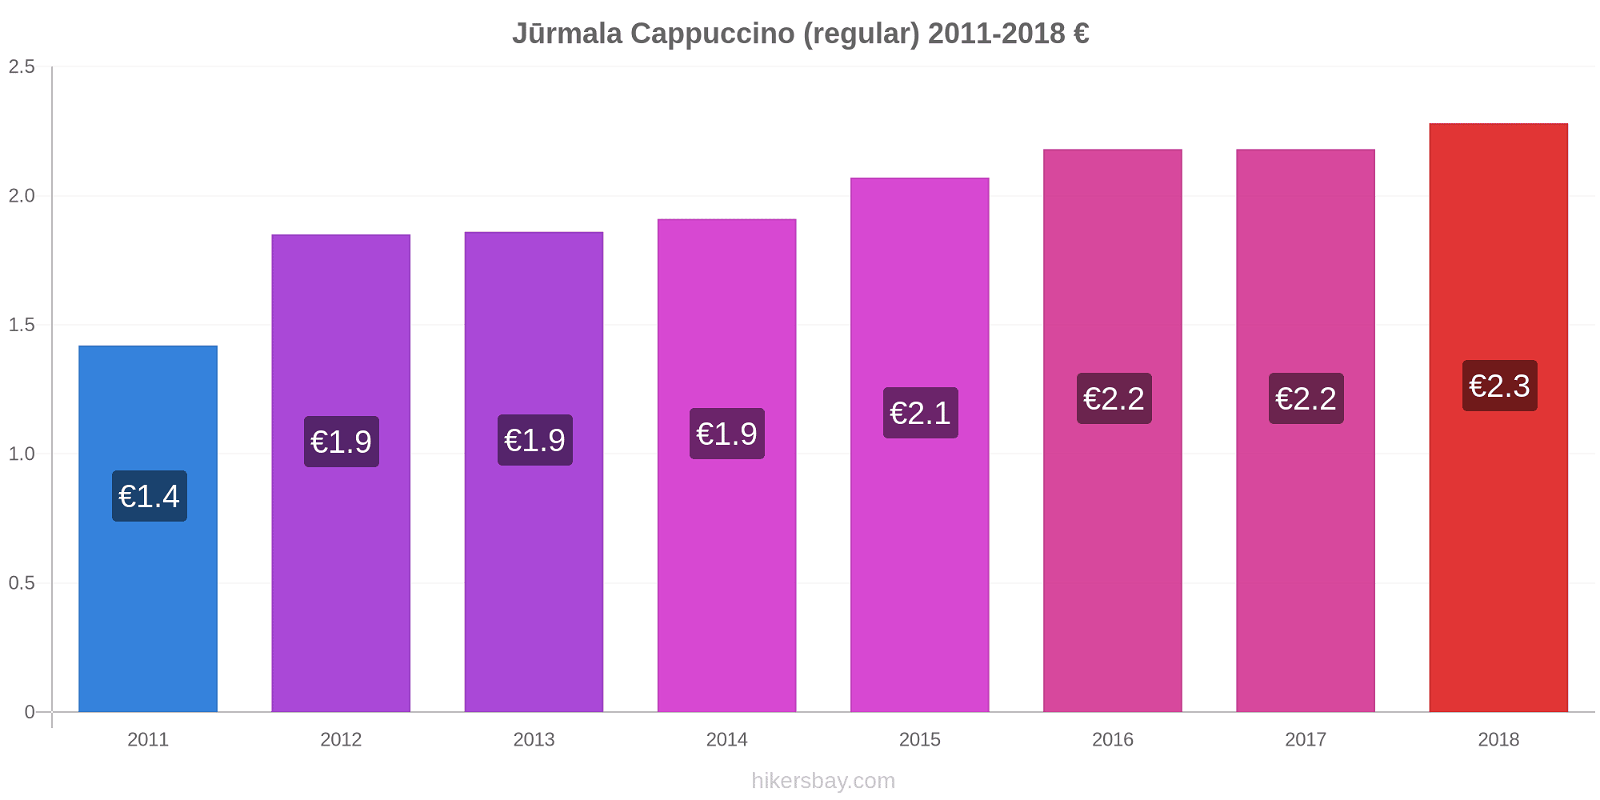 Jūrmala price changes Cappuccino (regular) hikersbay.com